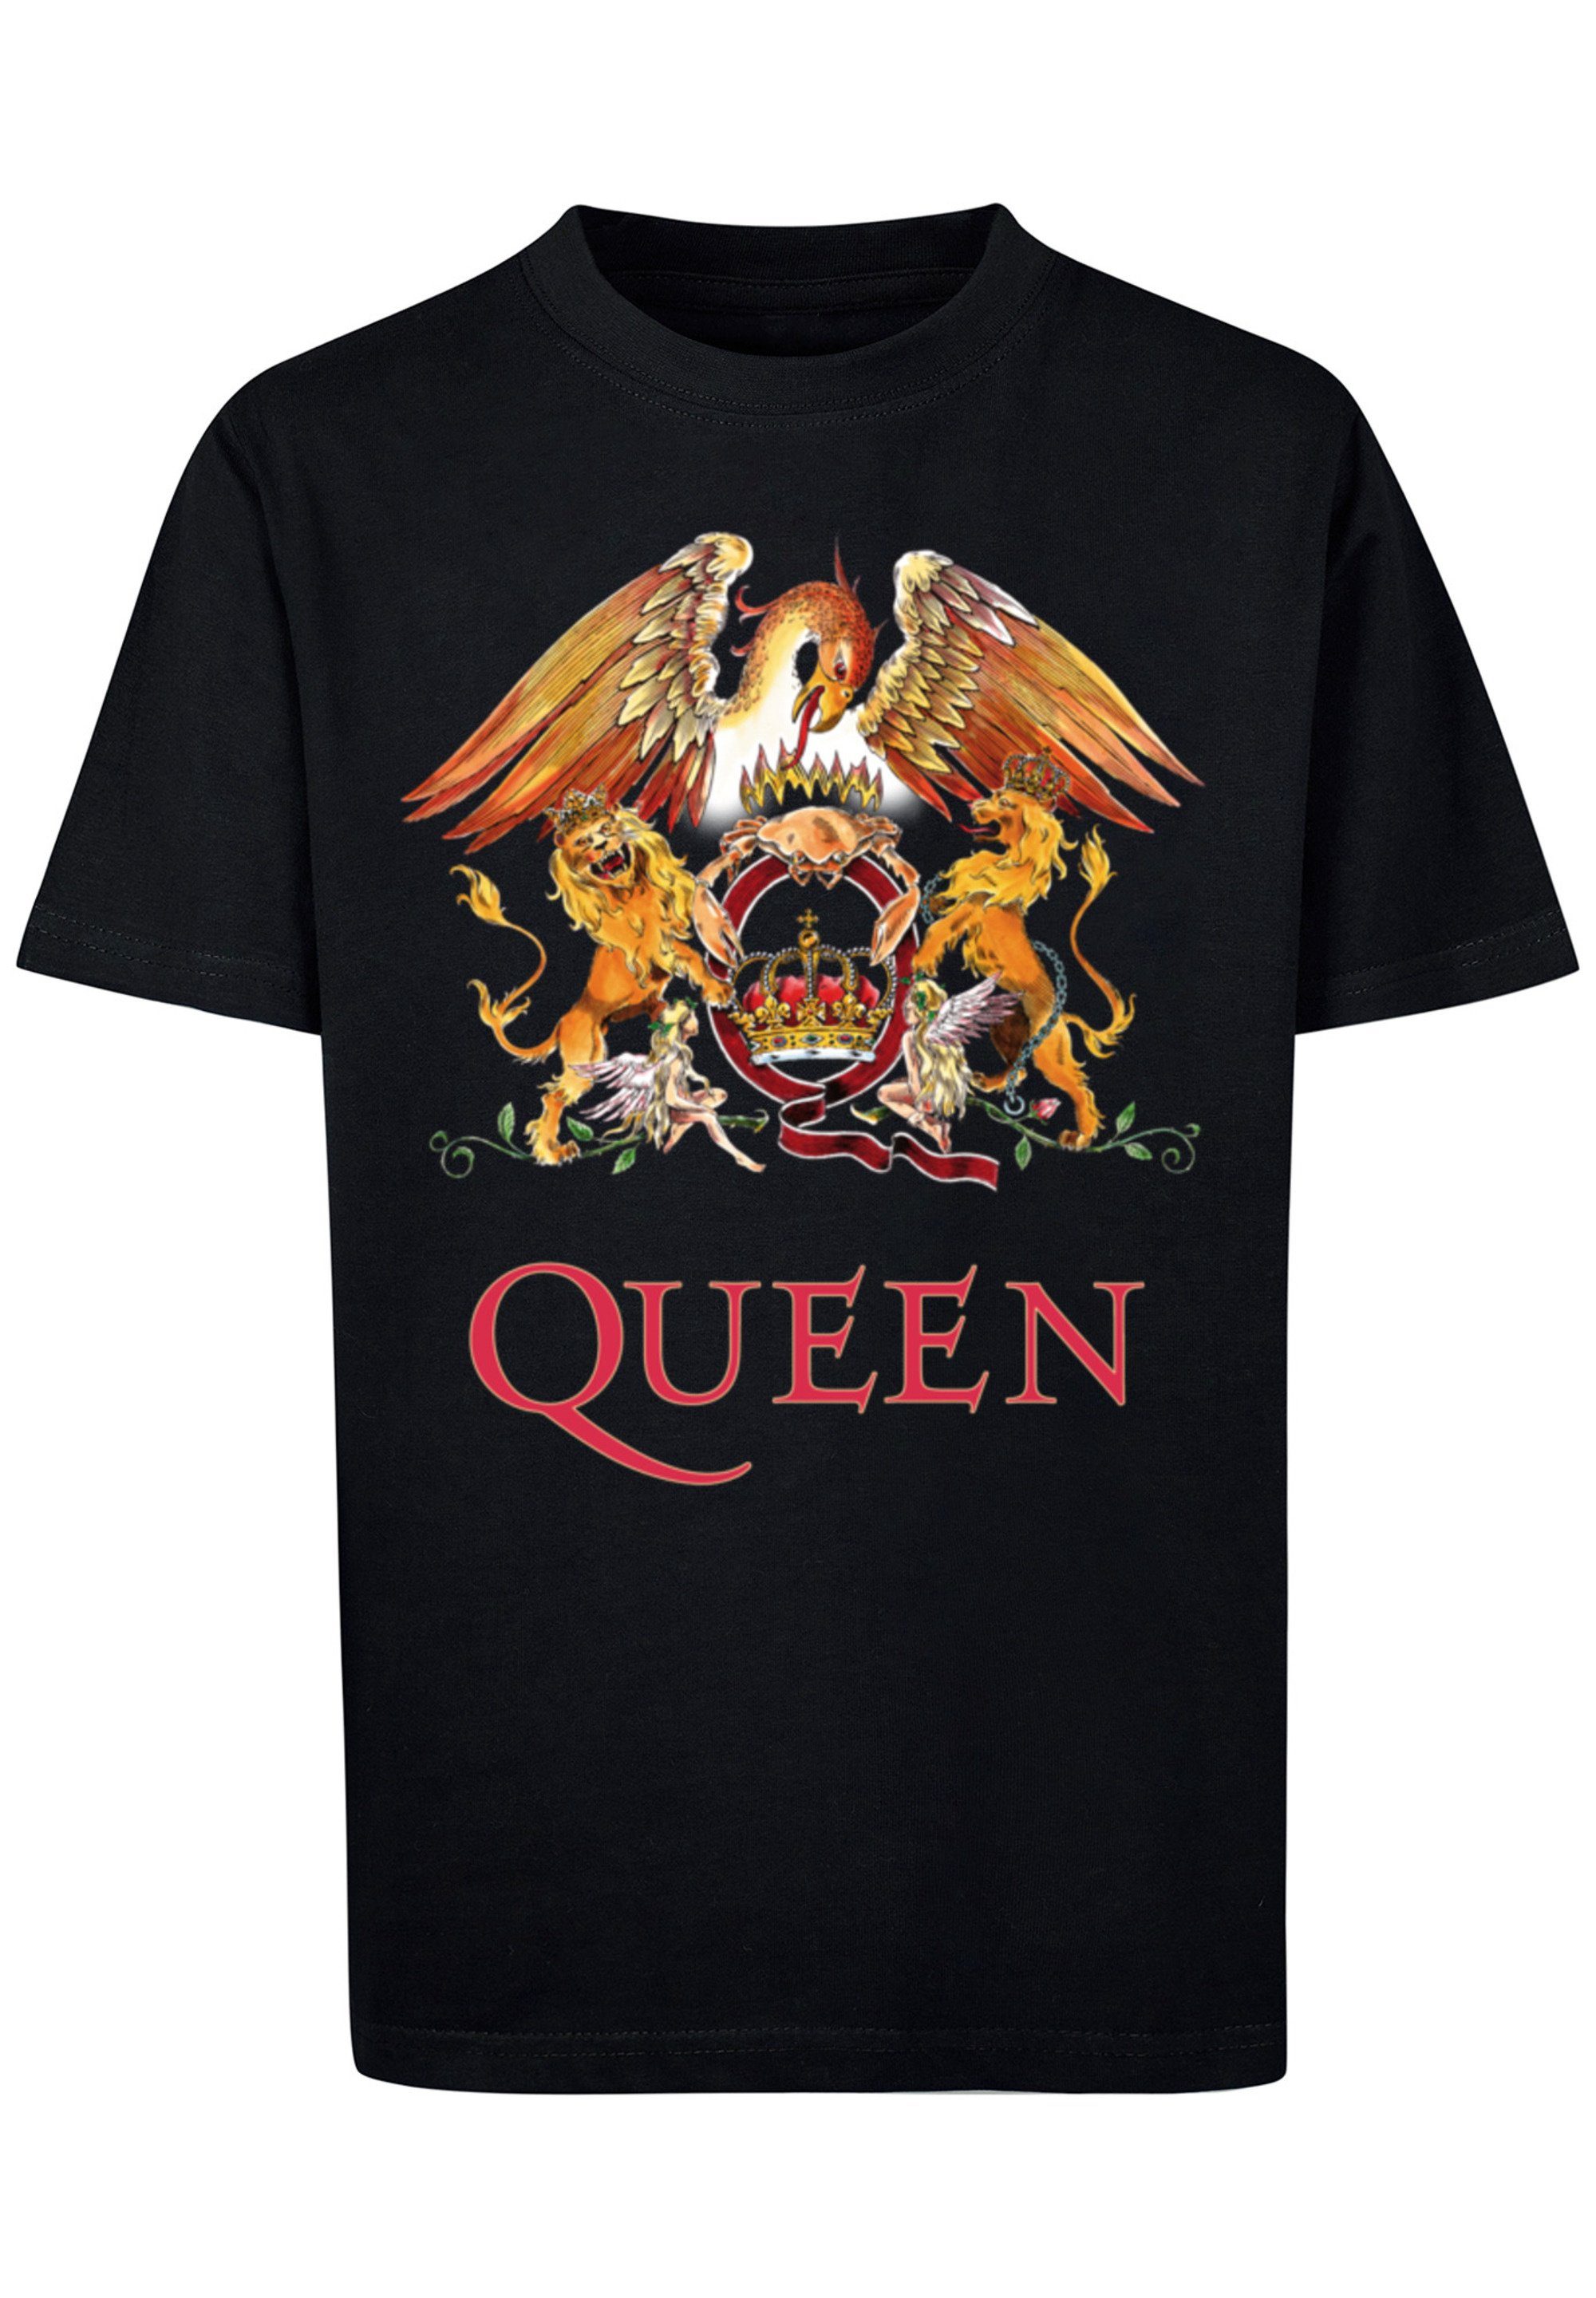 T-Shirt Queen Classic Print Black Rockband Crest F4NT4STIC schwarz